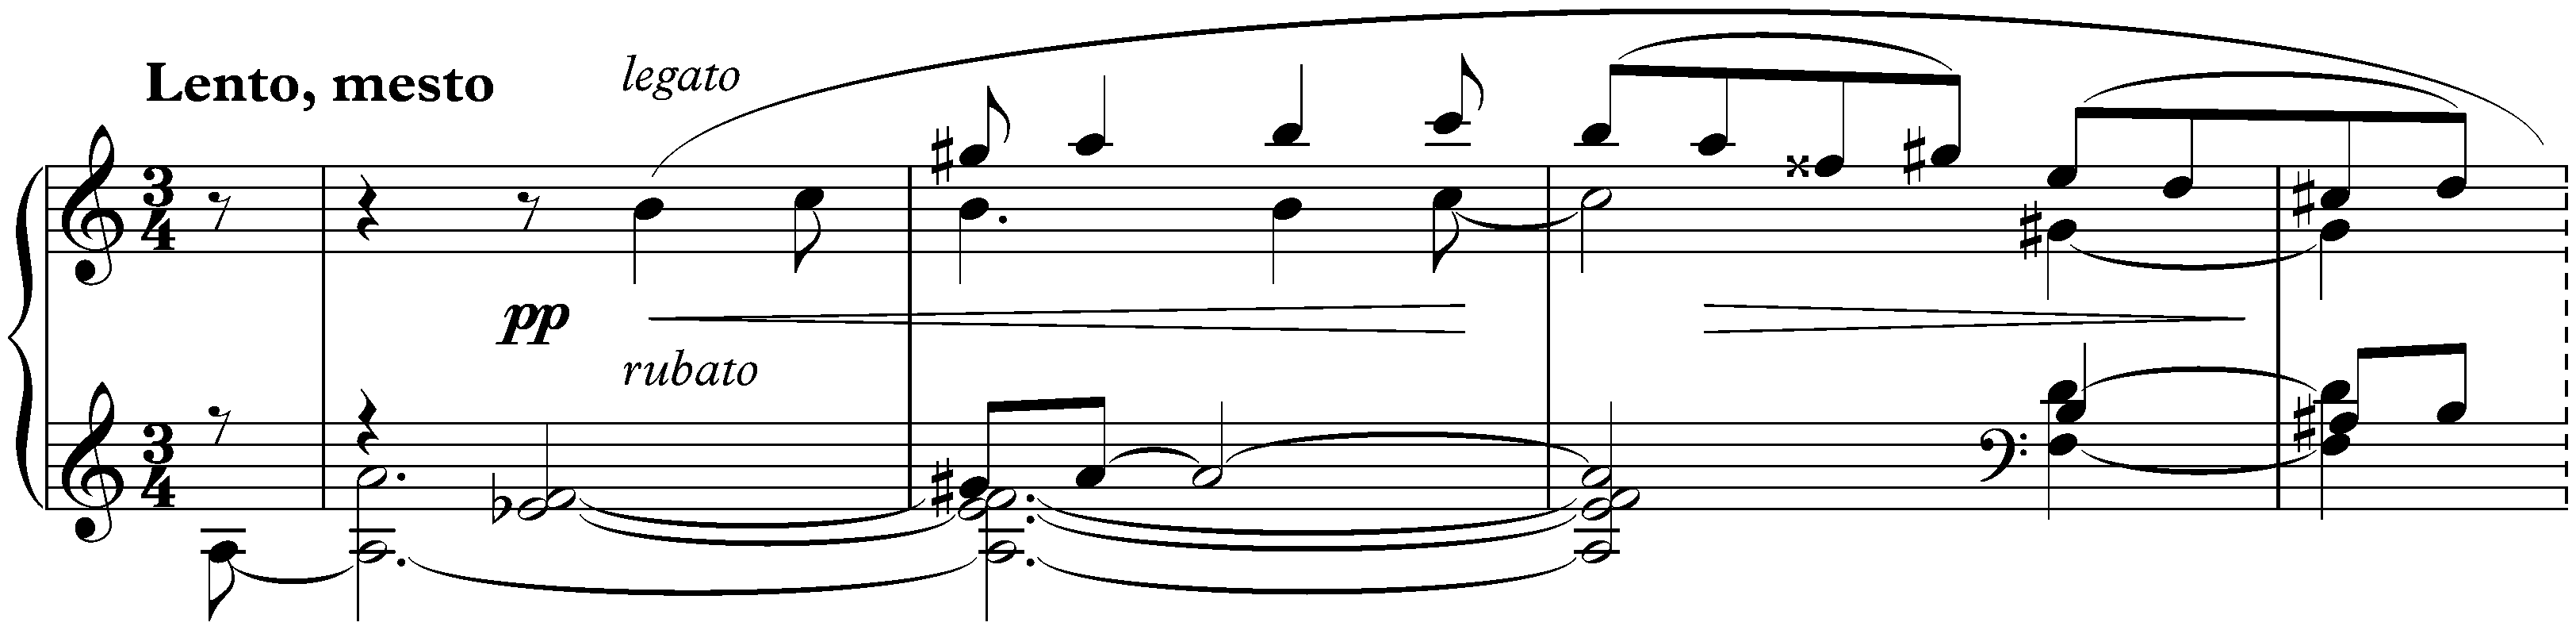 Nine Preludes, op. 1; 6. Lento, mesto